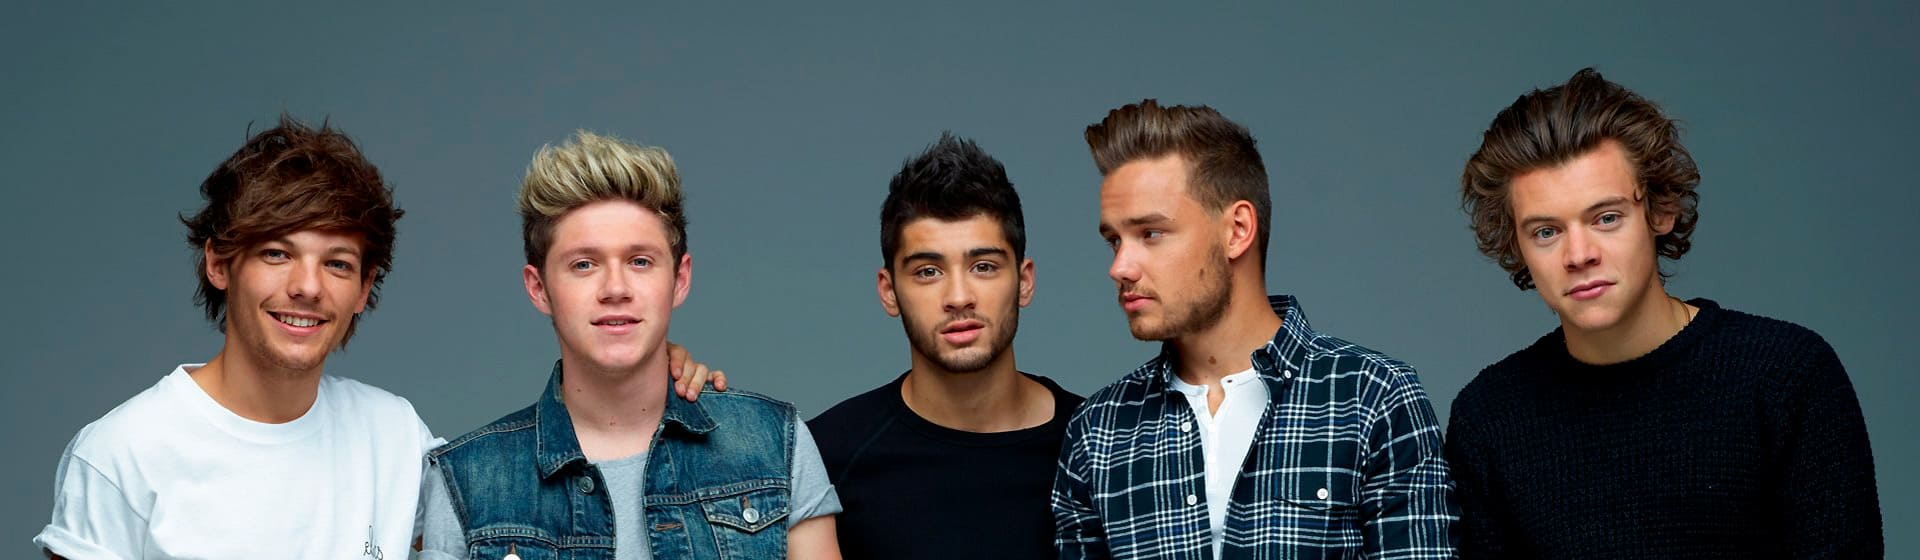 One Direction - Мерч и одежда с атрибутикой